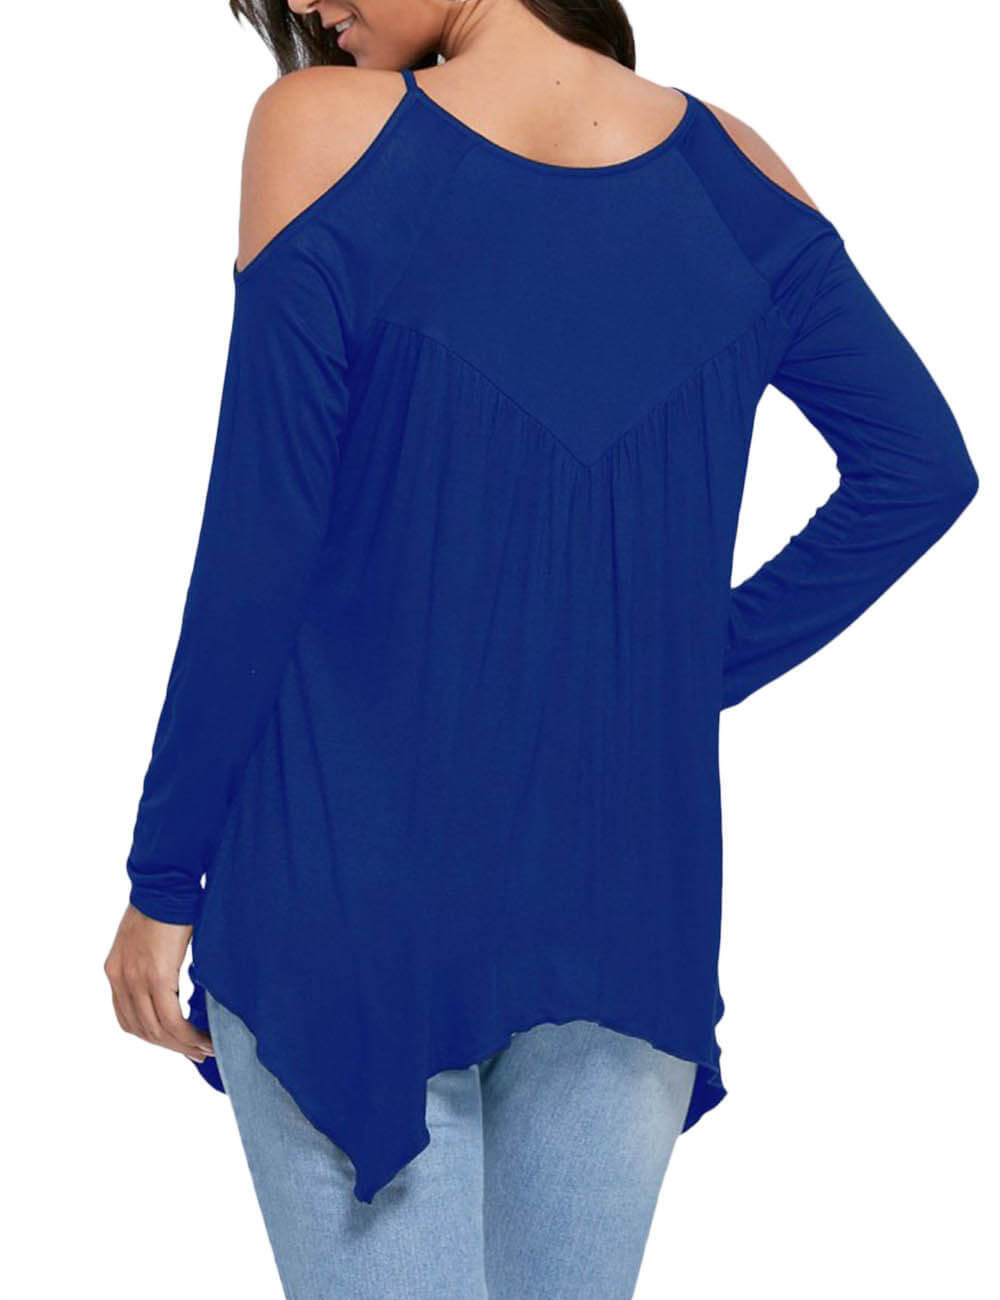  Women's Casual Cold Shoulder Blouse Top Long Sleeve Plain Hollow Out Asymmetric Off The Shoulder Lace T Shirts